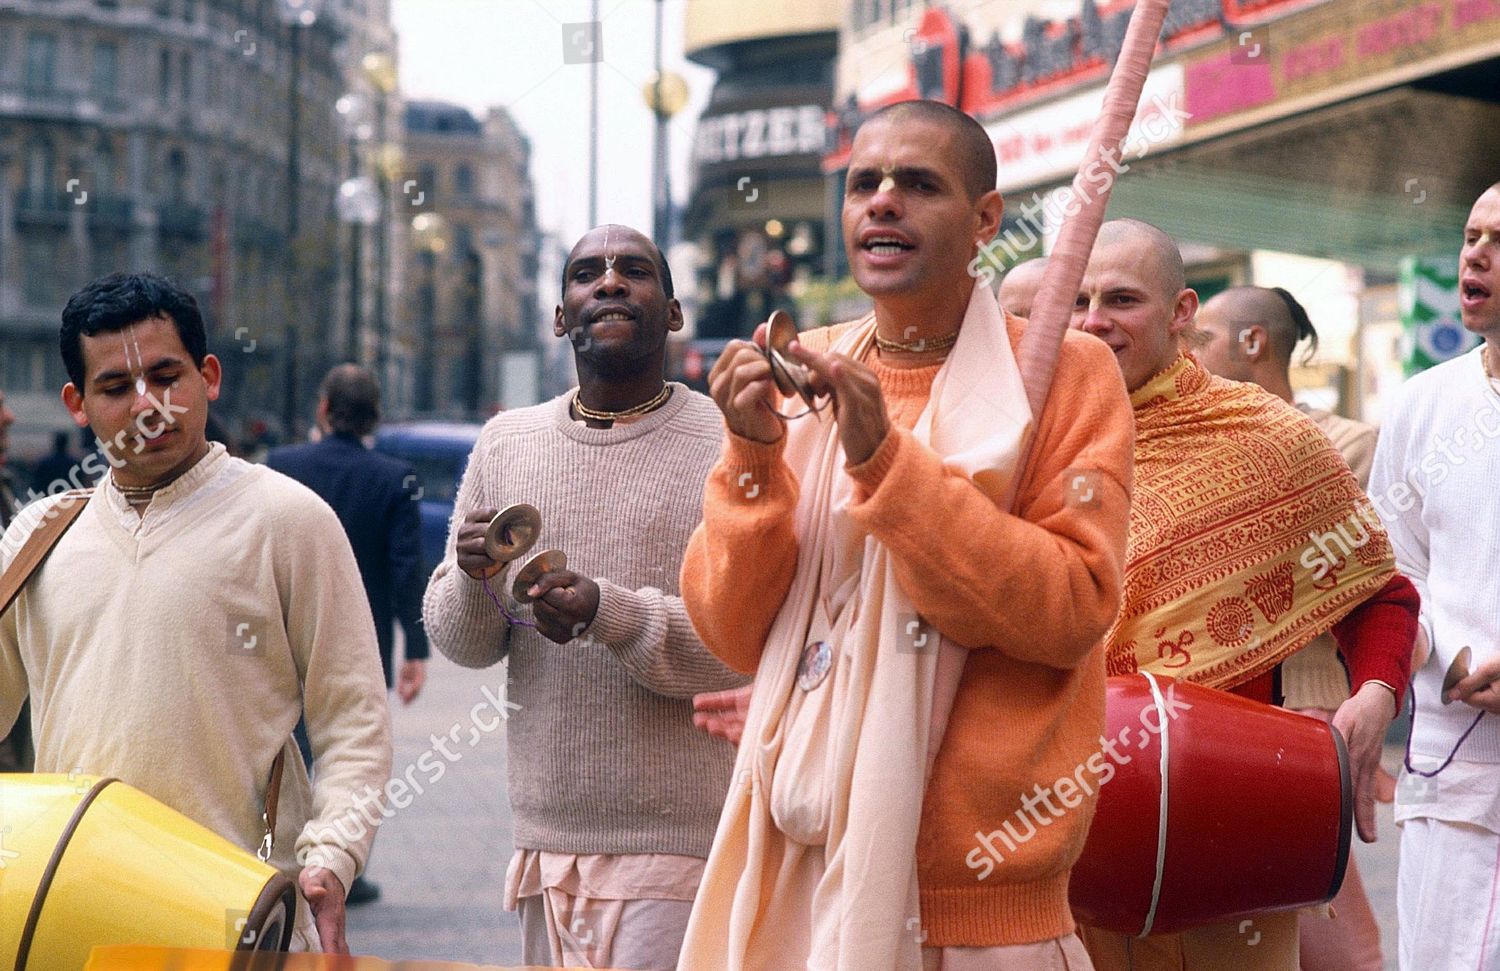 Os Hare Krishnas